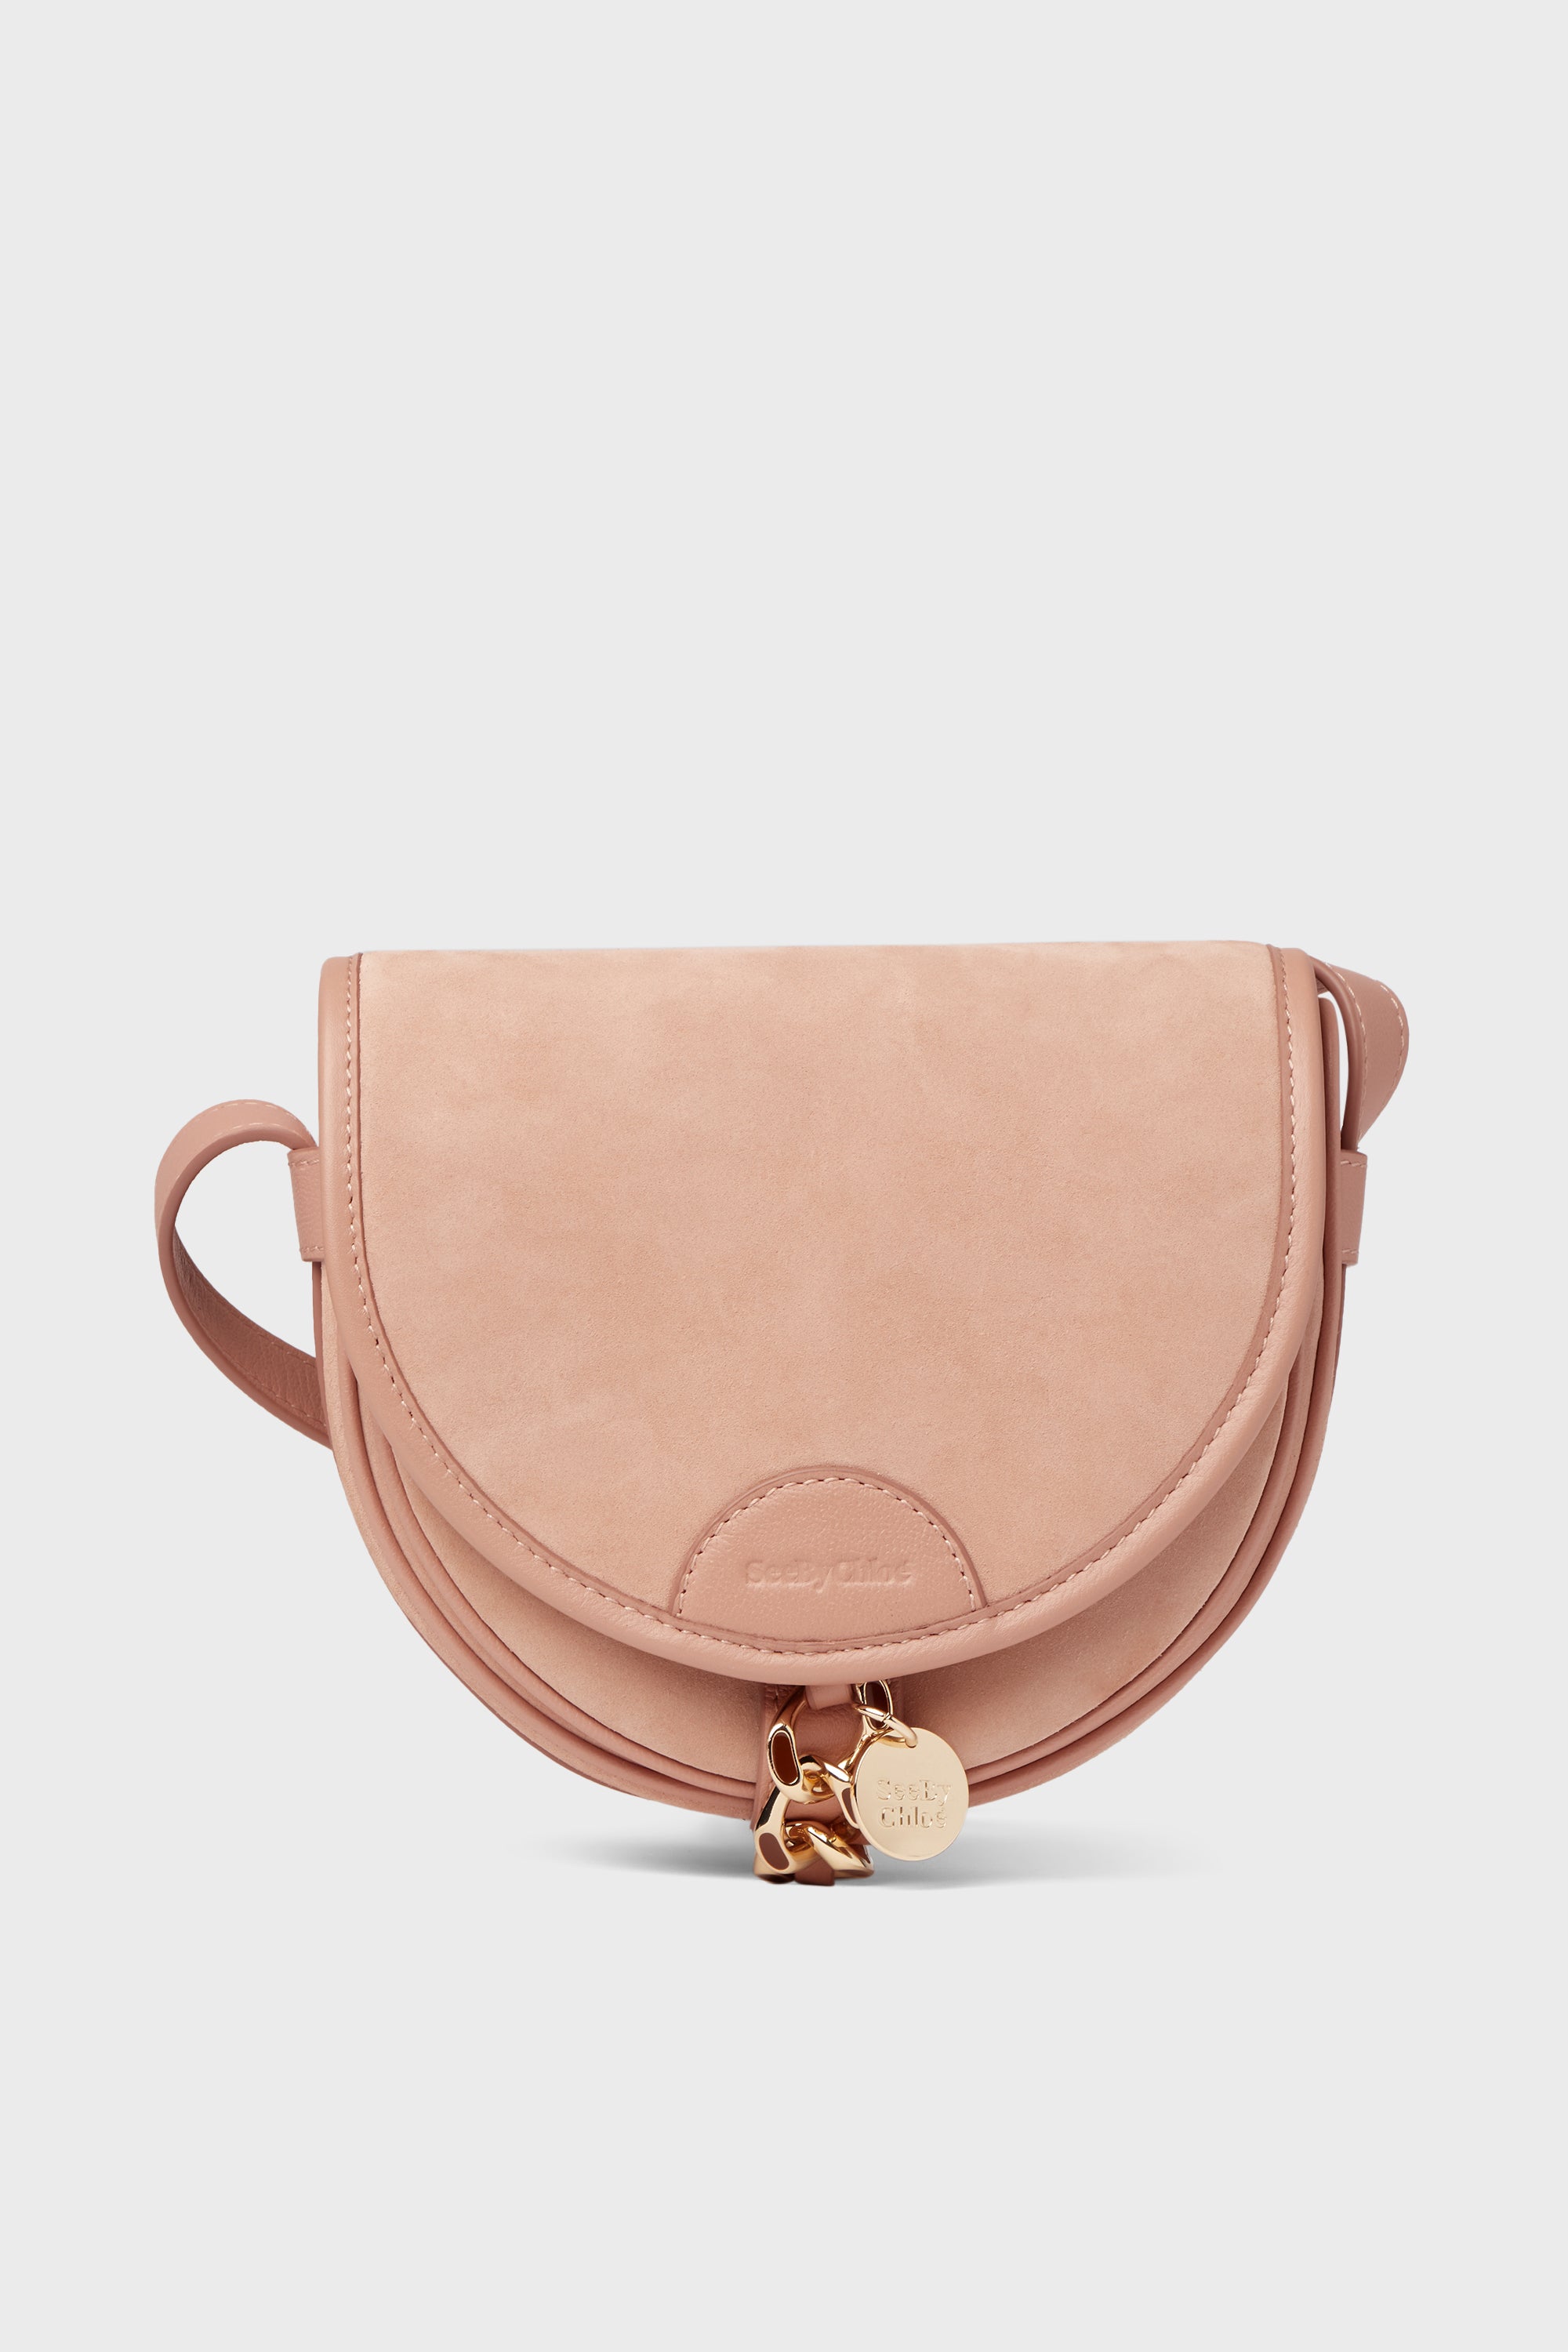 Chloe Marcie Small Saddle Bag in Blossom Pink – Stanley Korshak